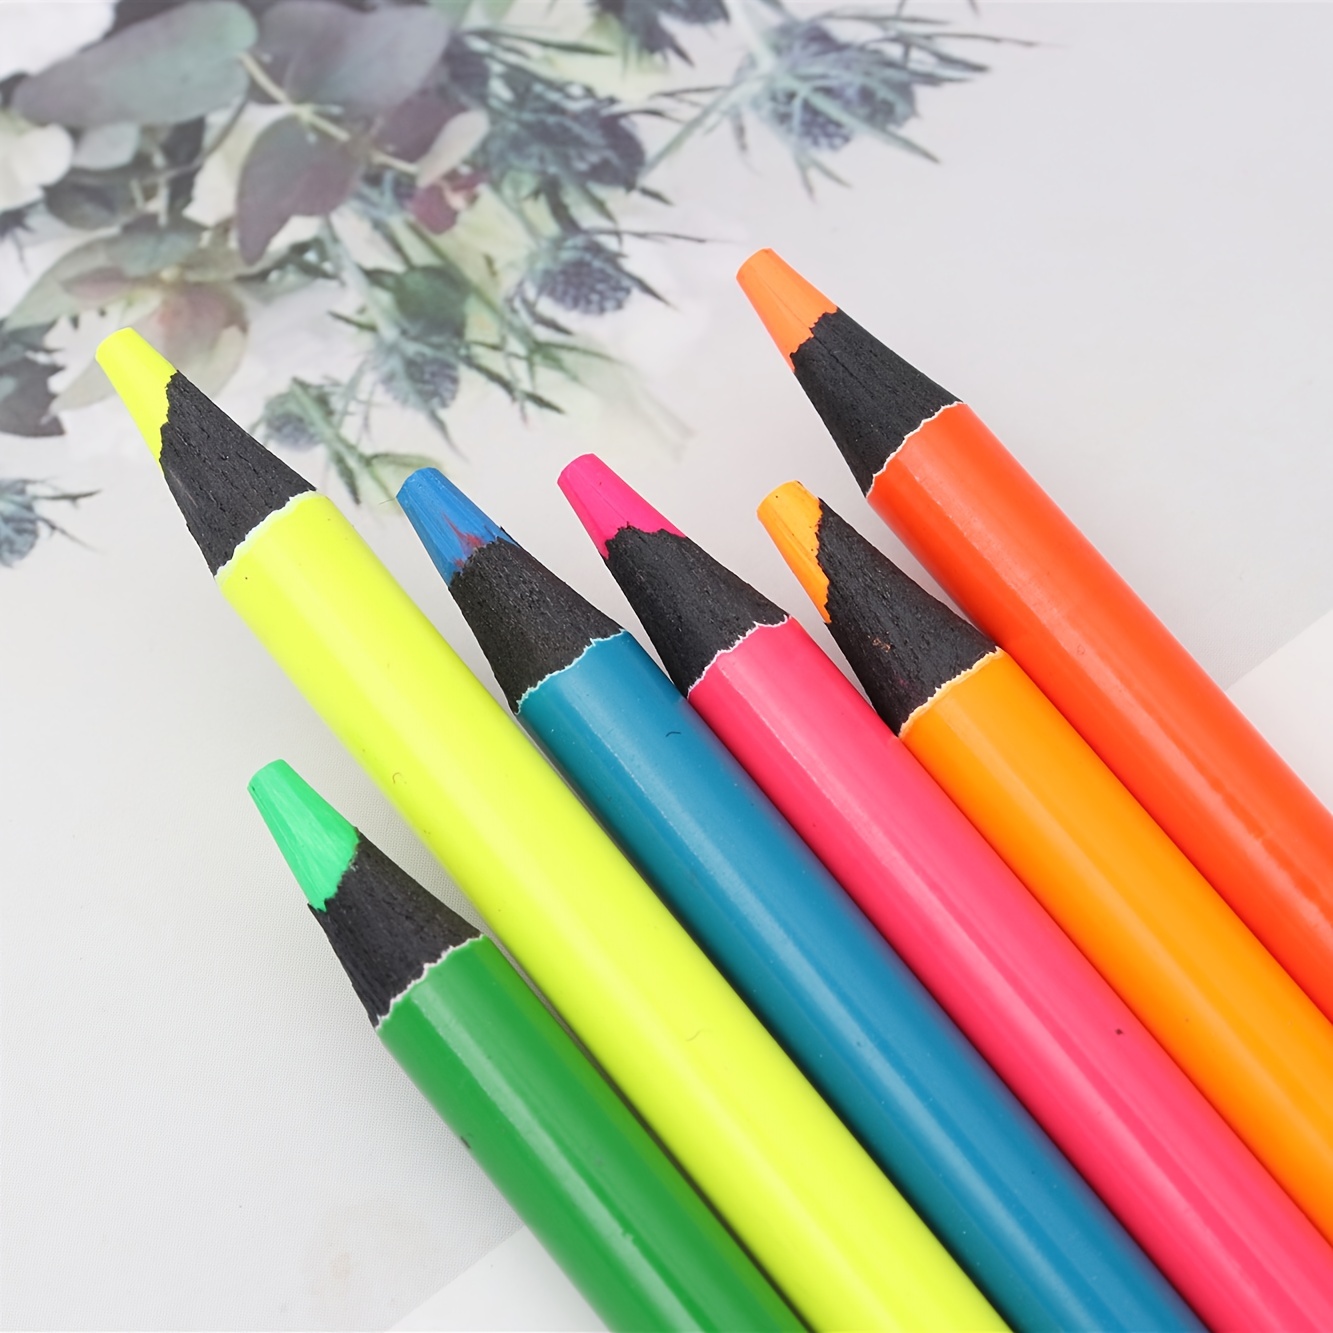 Neon Colouring Pencils